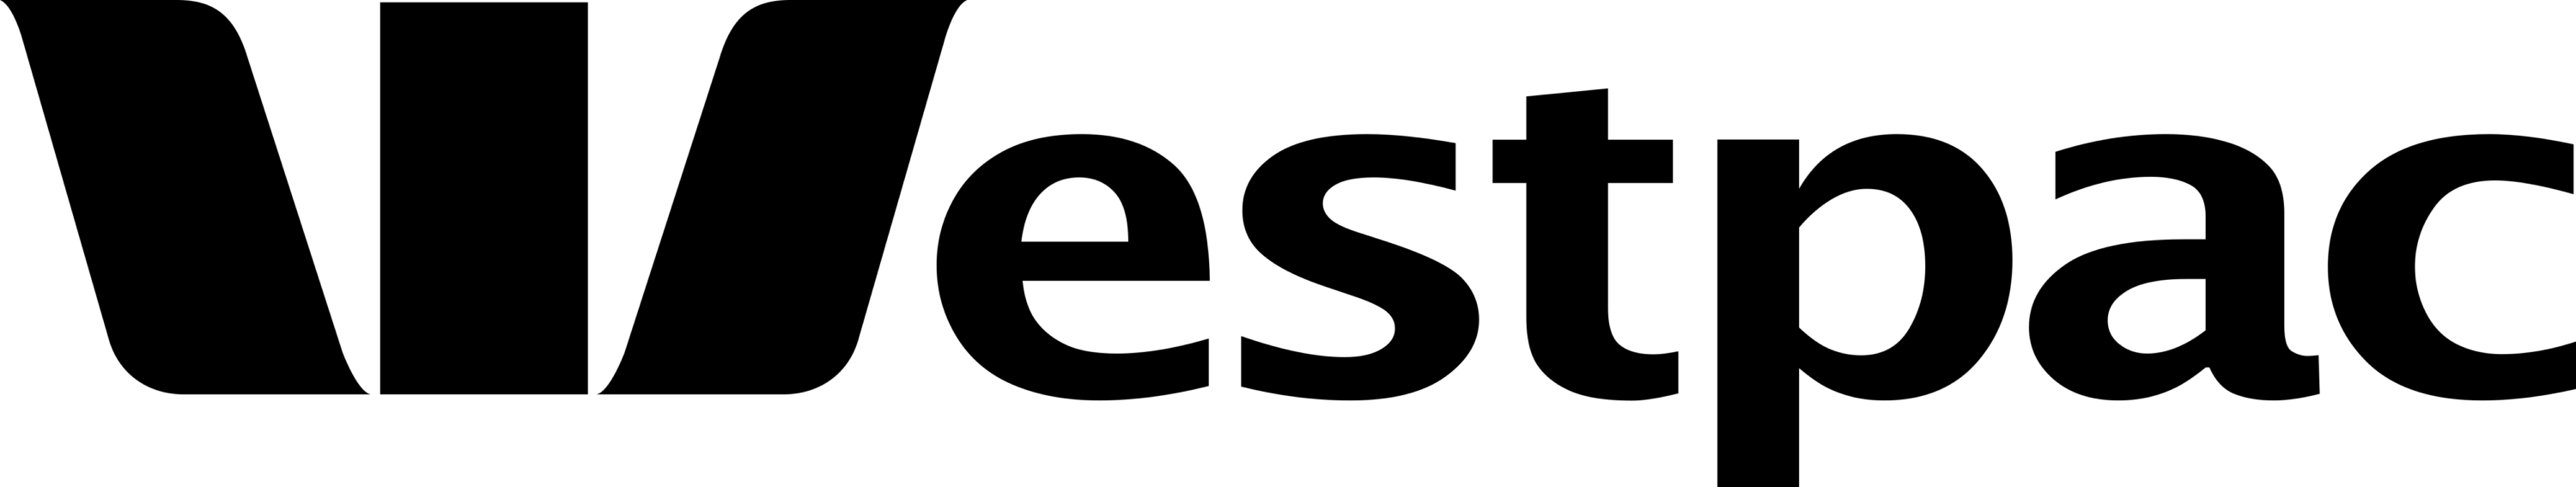 Westpac print Logo 2003